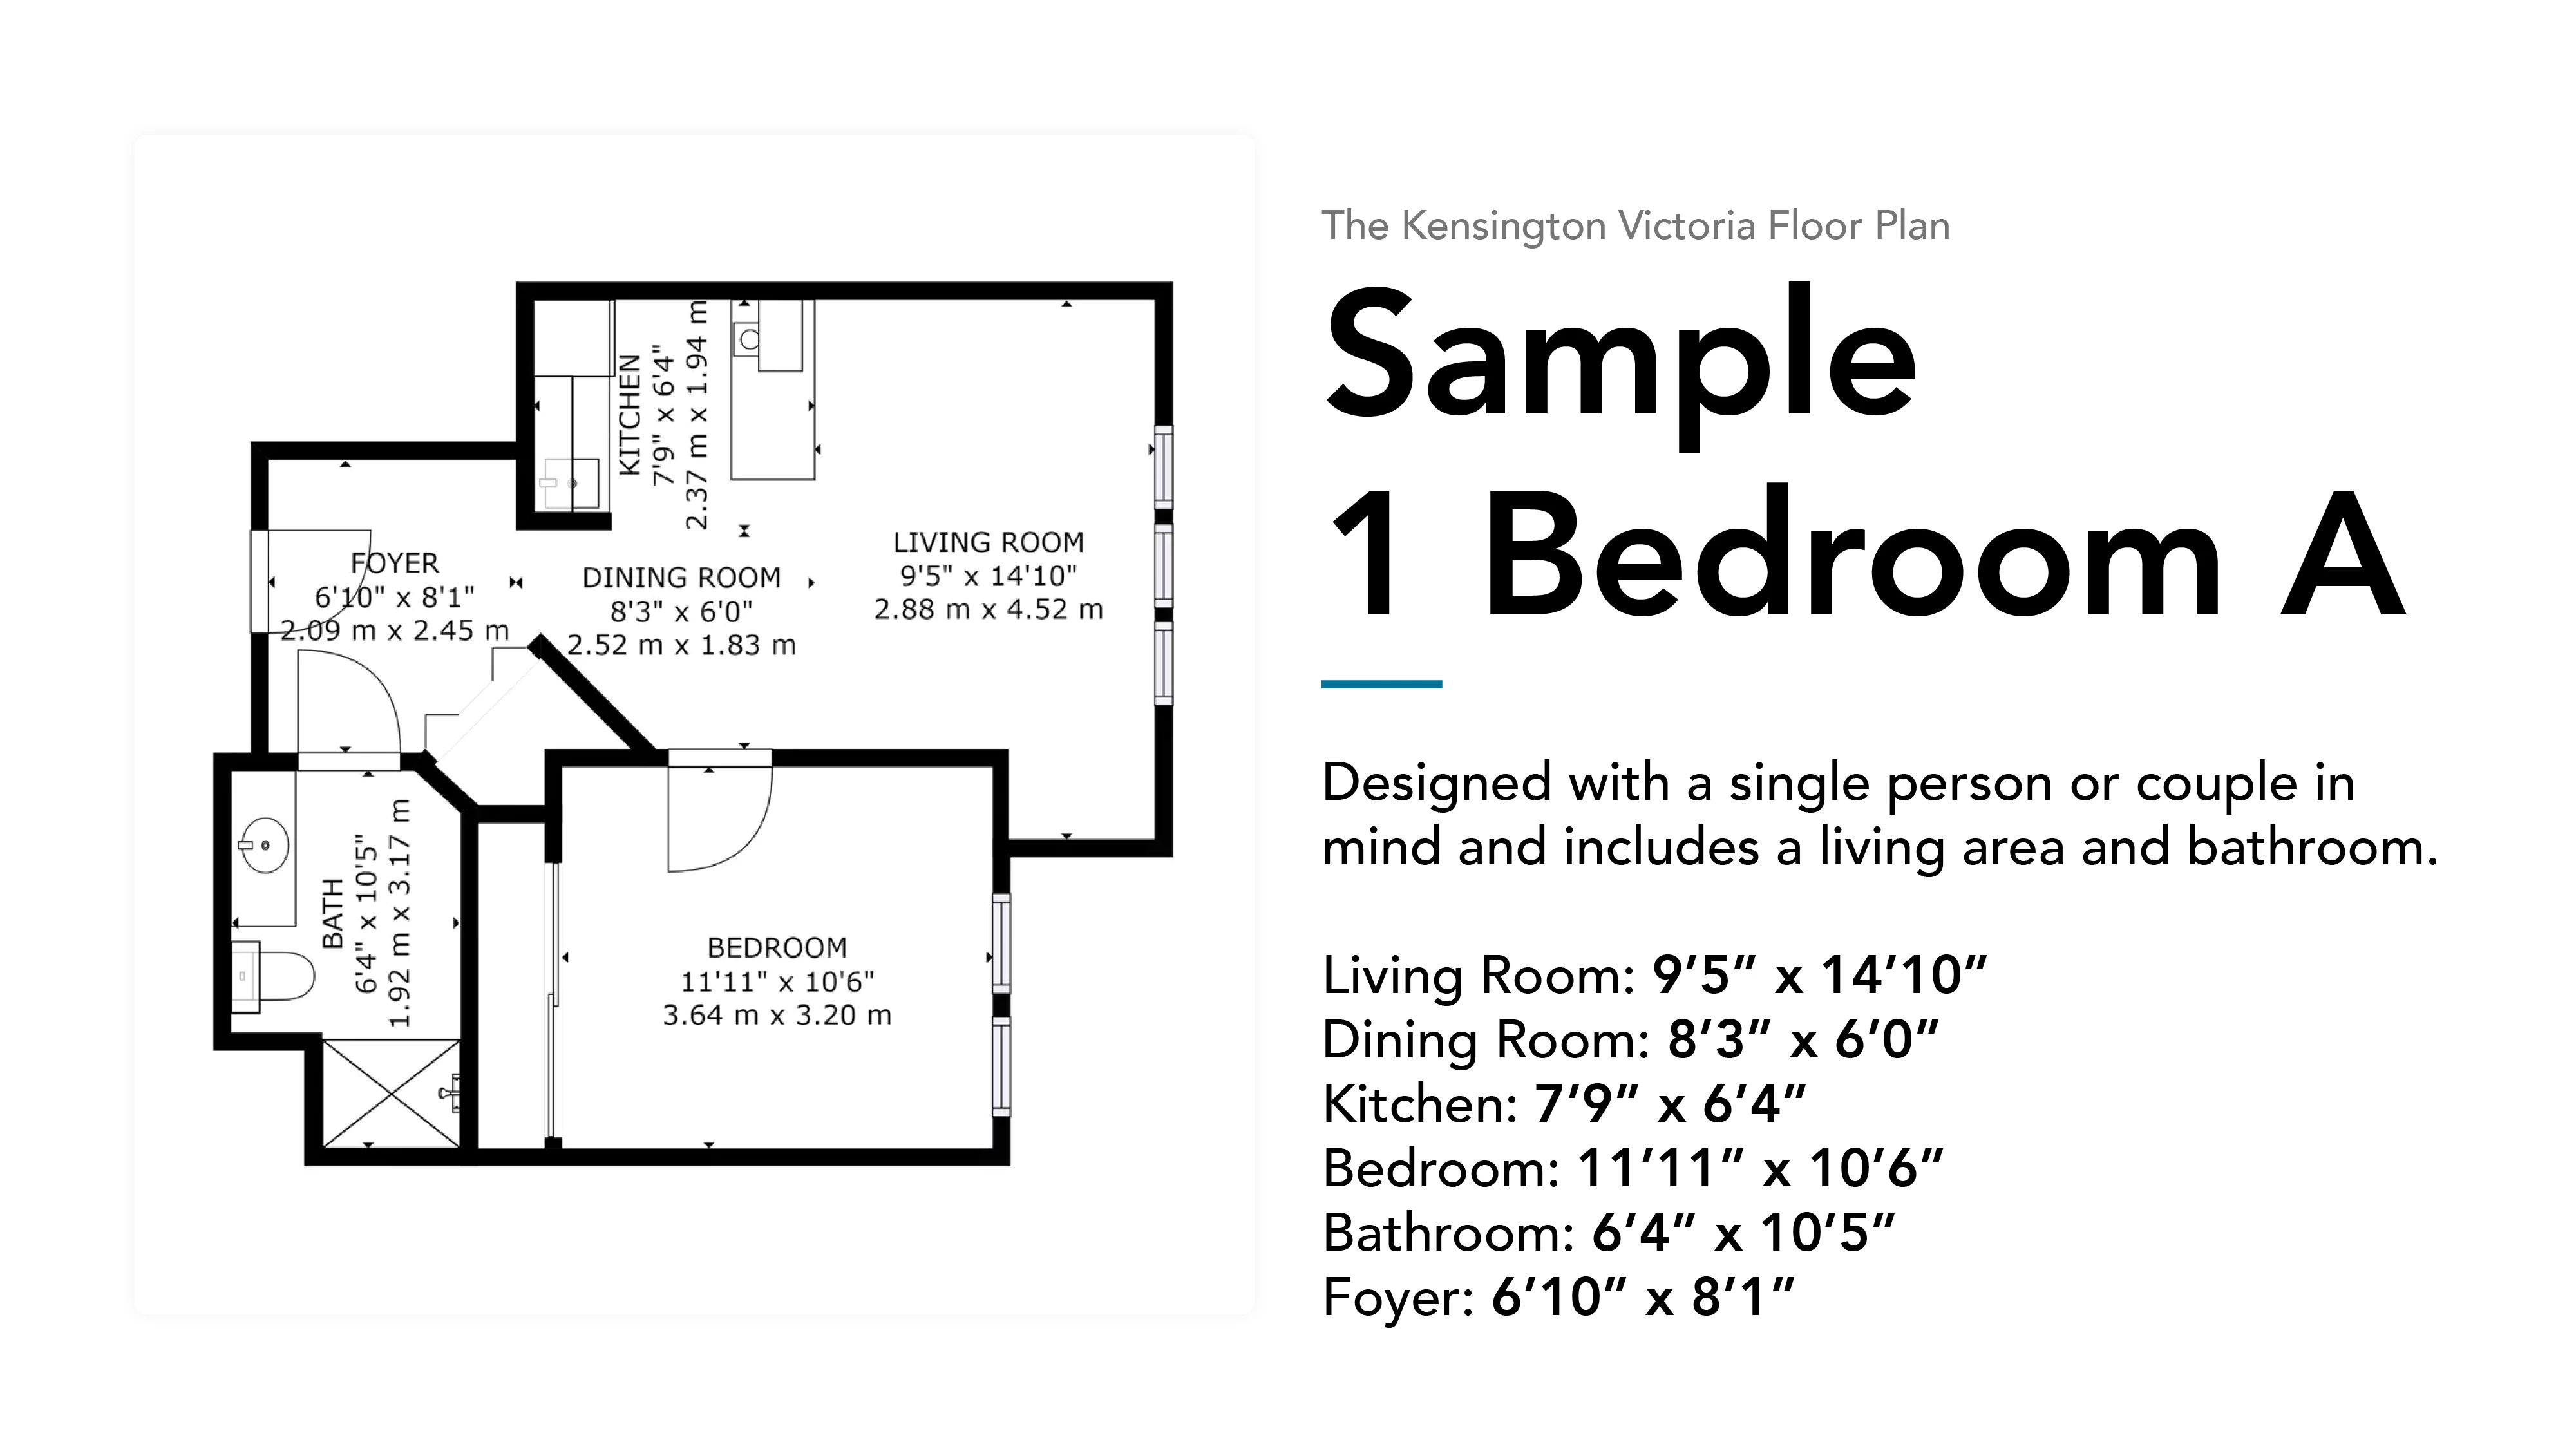 Kensington Victoria sample 1 bedroom a floor plan